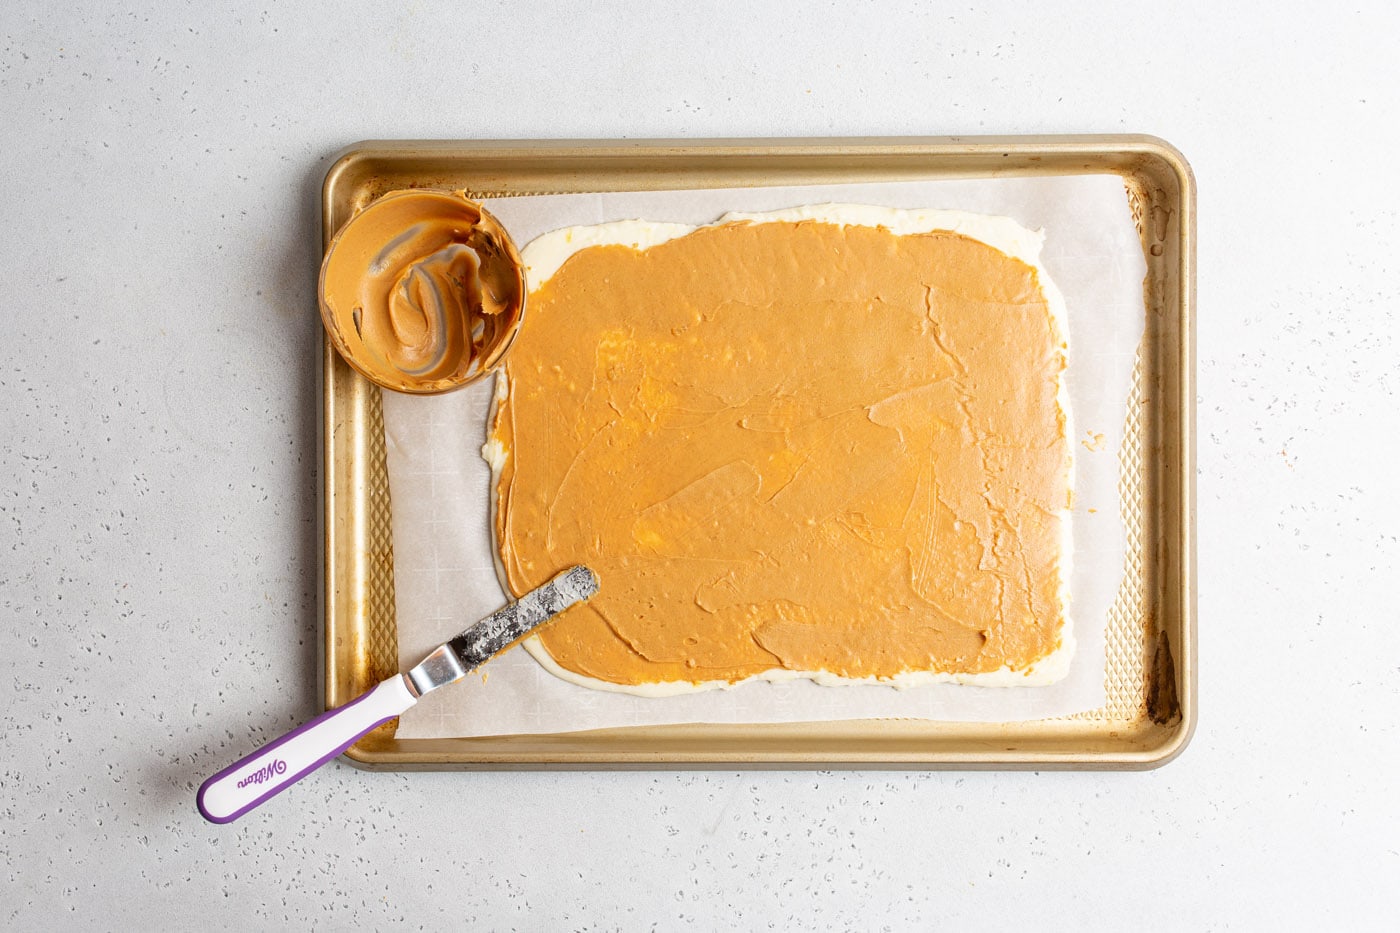 offset spatula smoothing peanut butter on potato dough